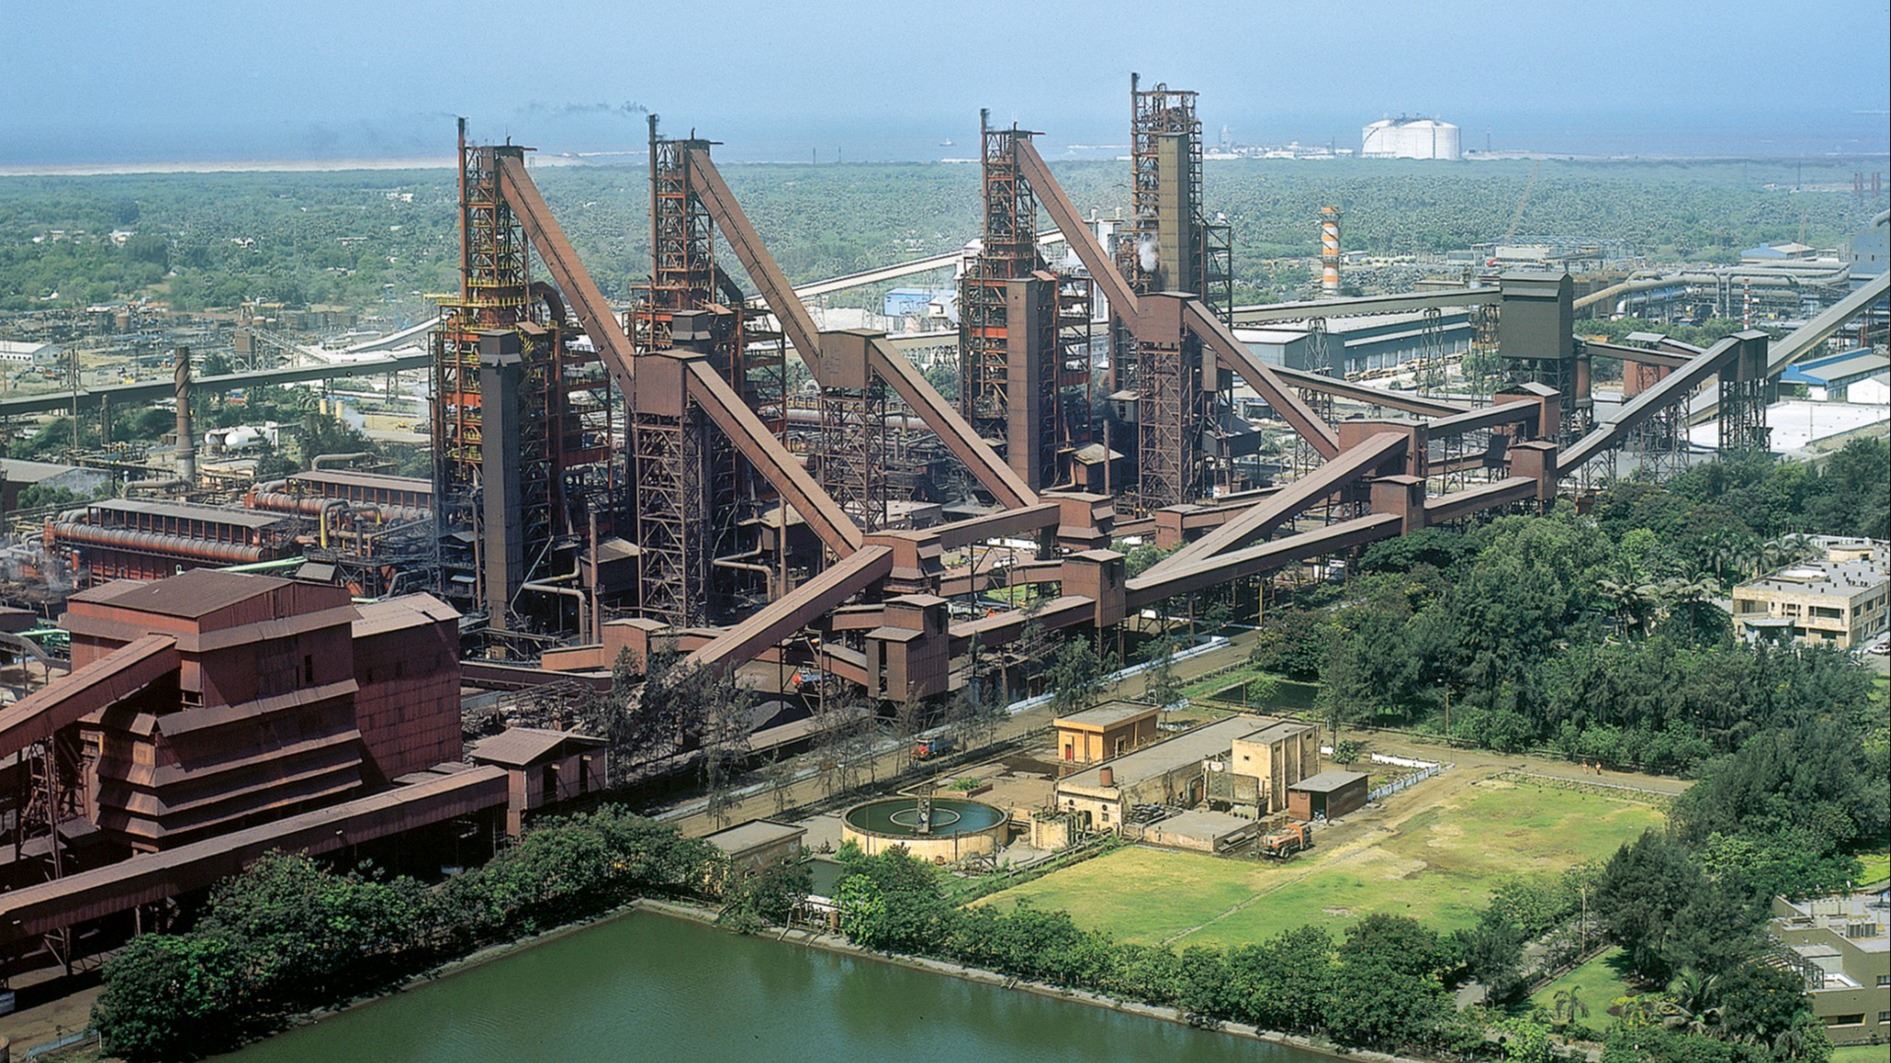 ArcelorMittal Nippon Steel's crude steel production increased